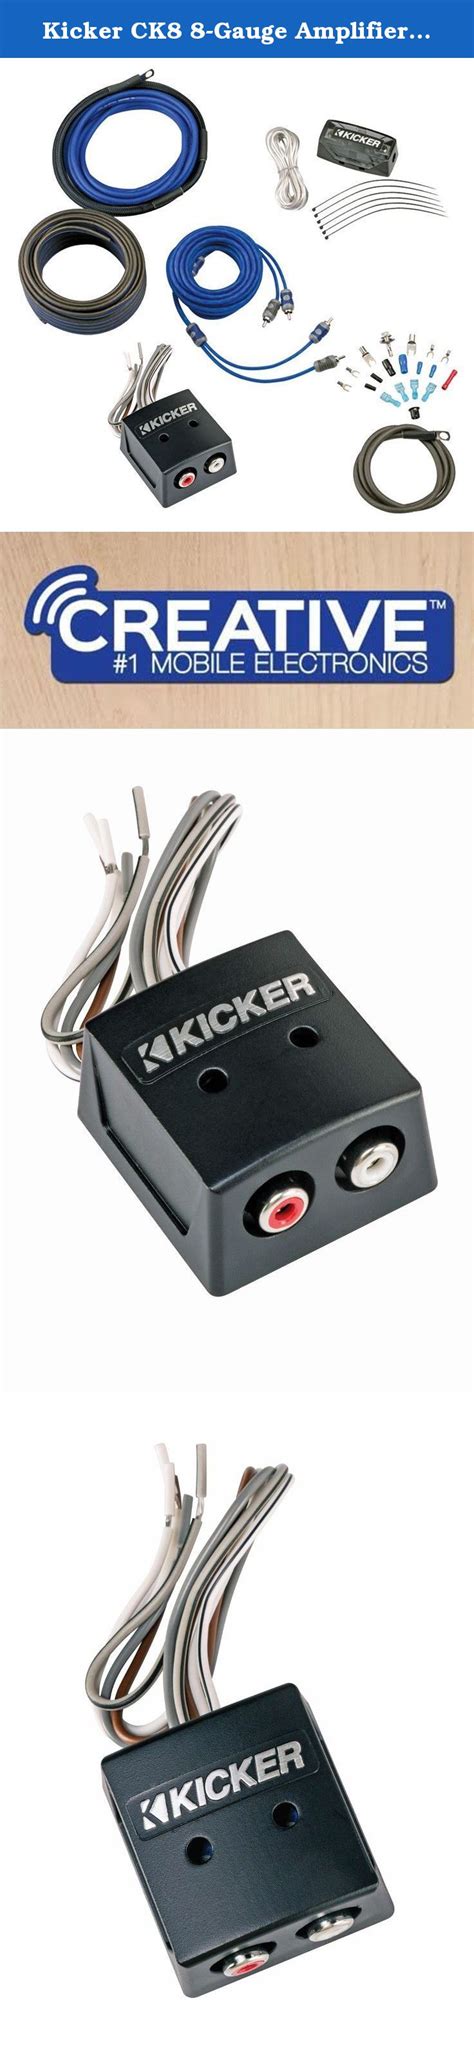 kicker stereo wiring diagram